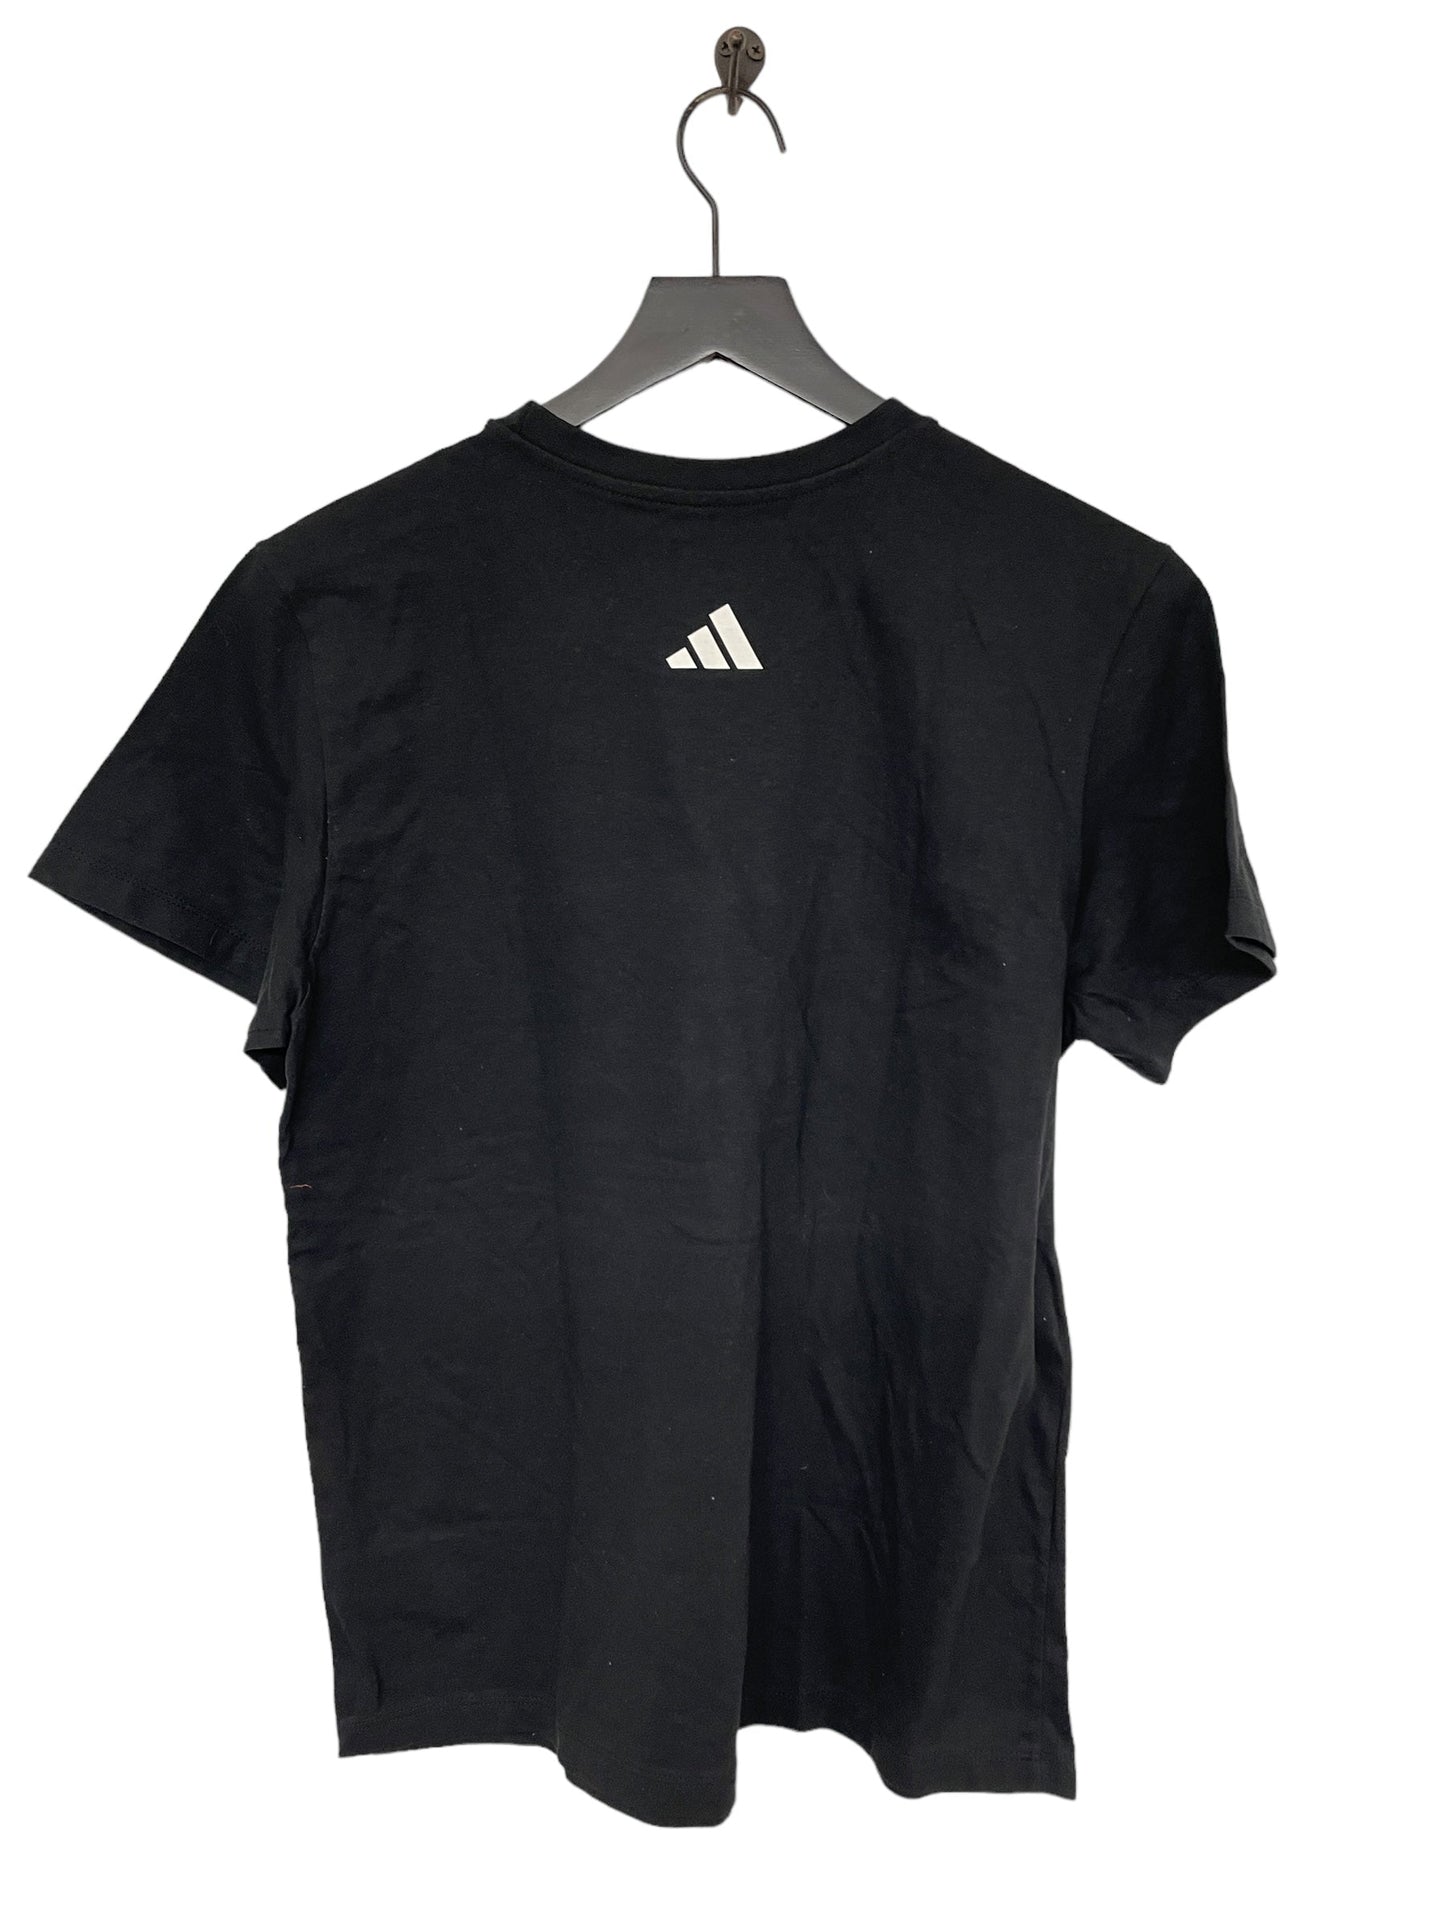 Black Top Short Sleeve Adidas, Size L